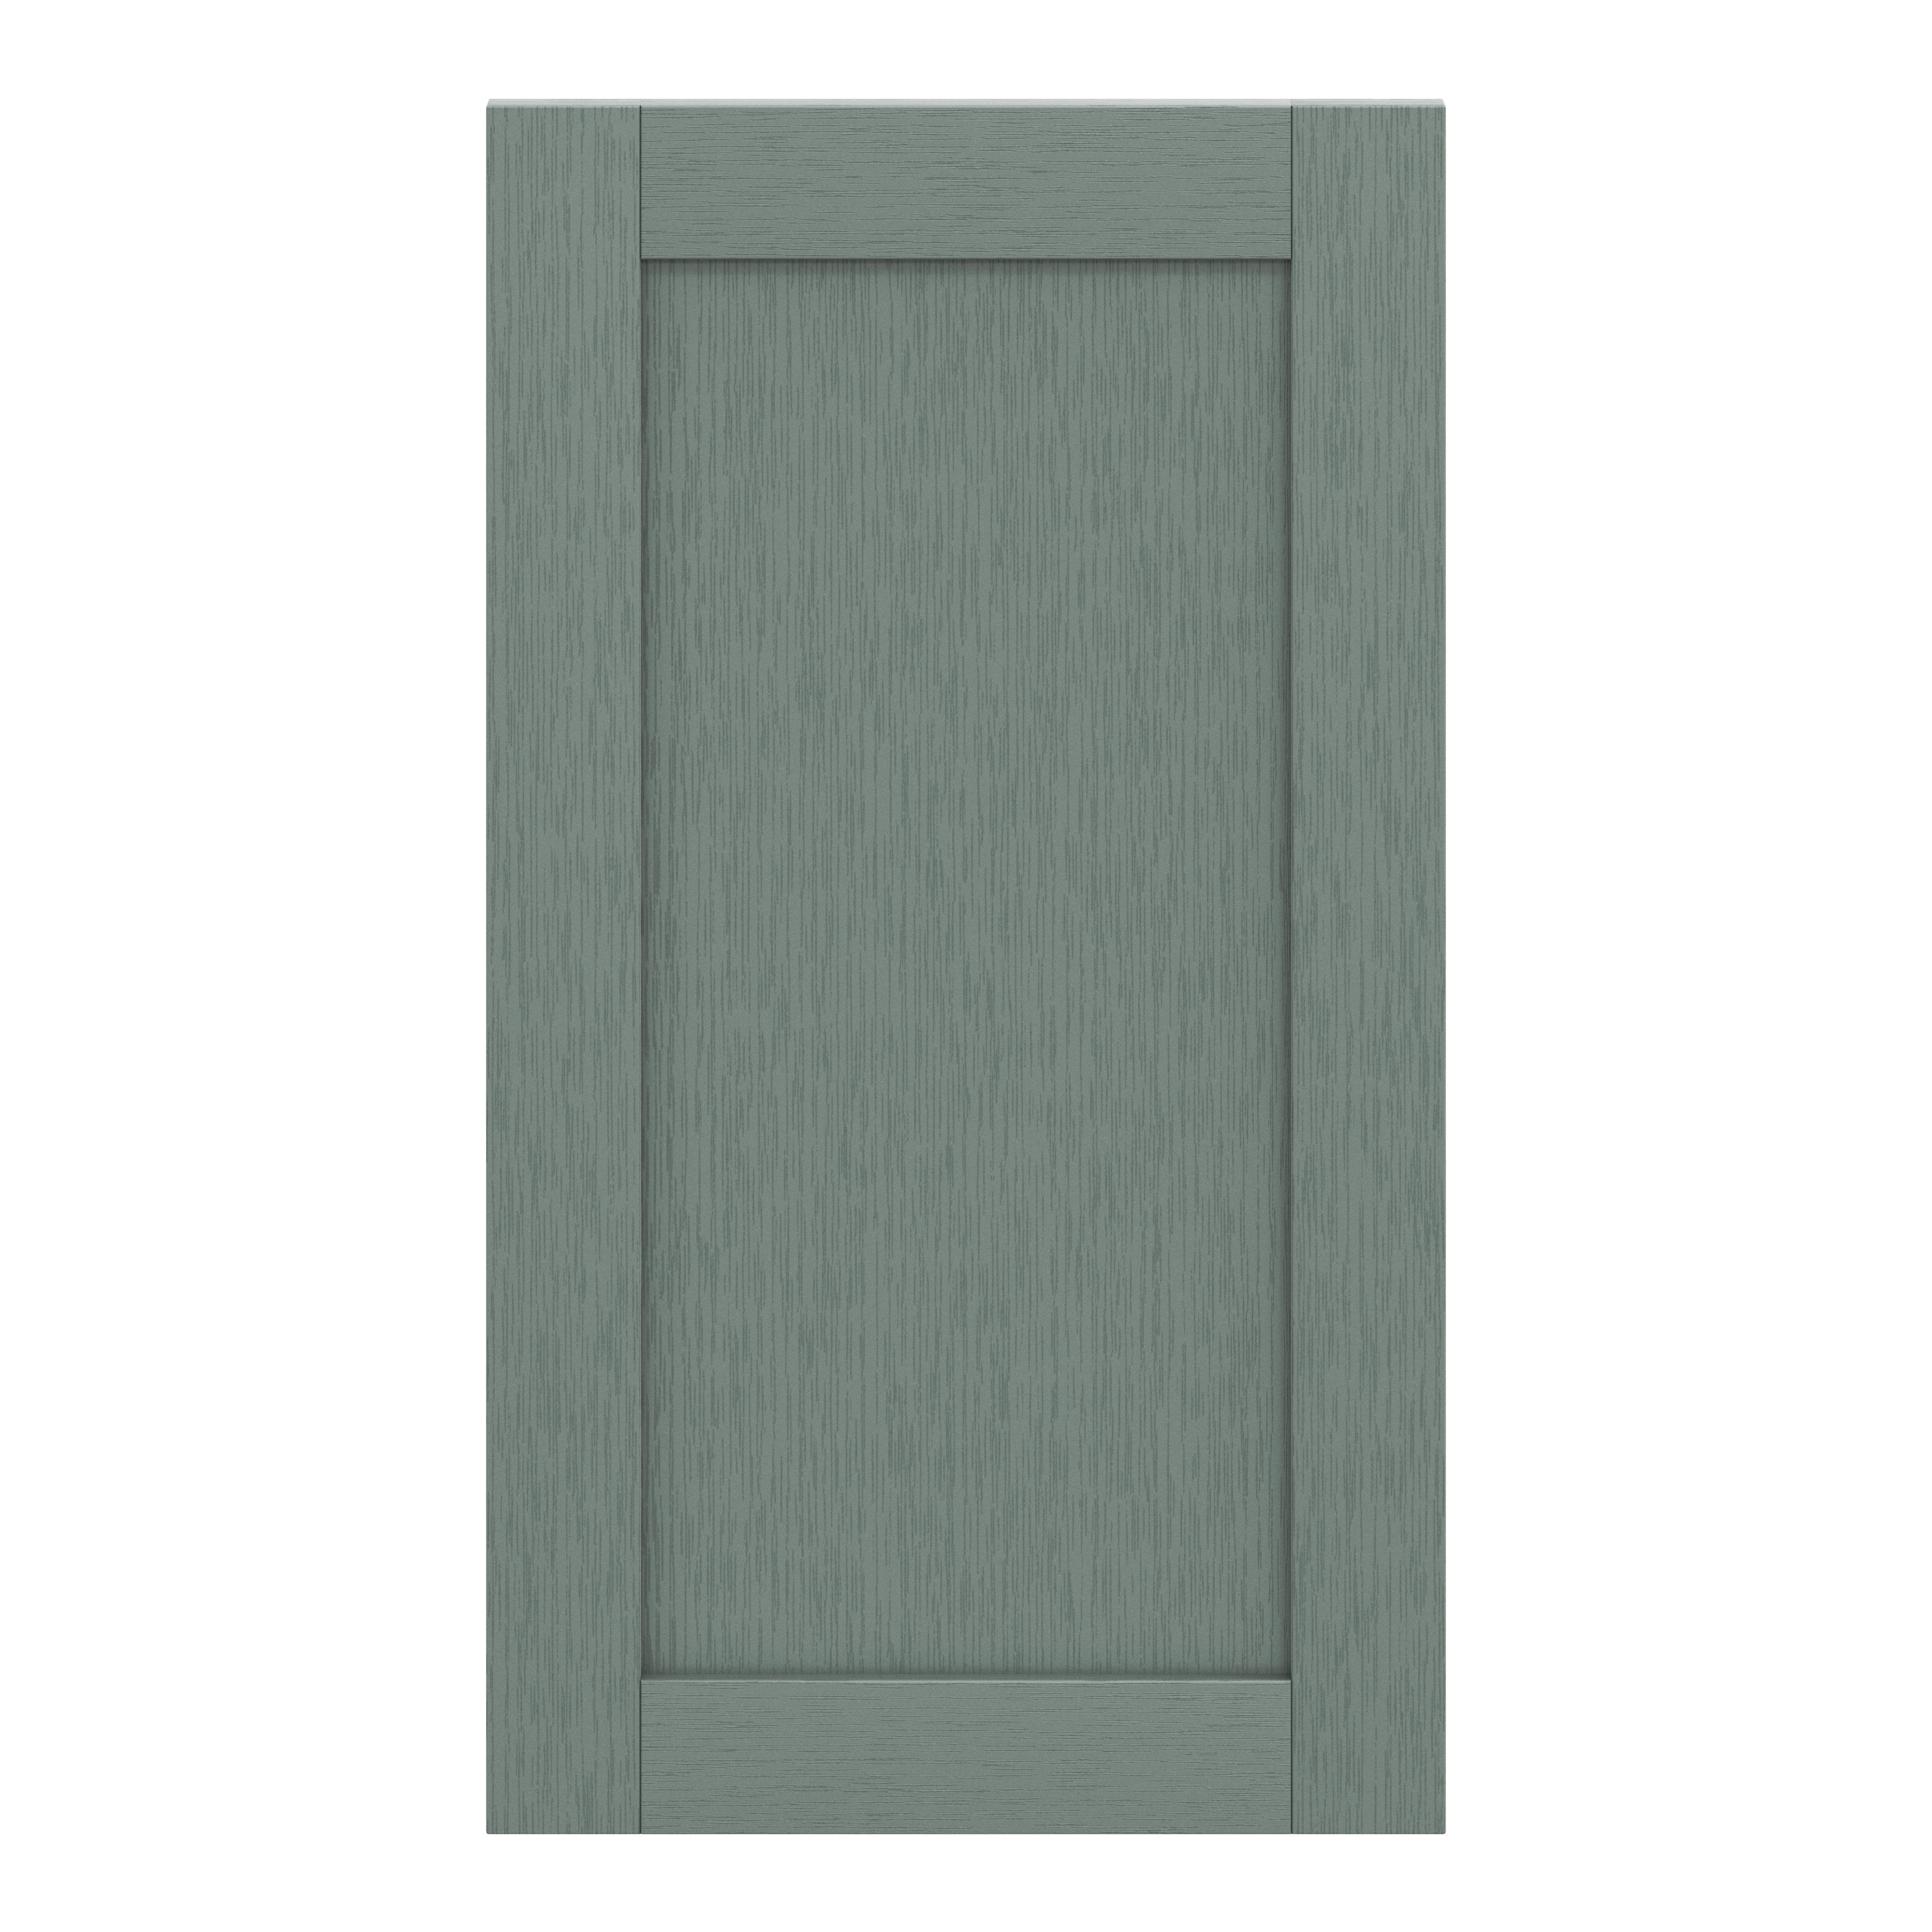 GoodHome Alpinia Matt Green Painted Wood Effect Shaker Tall wall Cabinet door (W)500mm (H)895mm (T)18mm